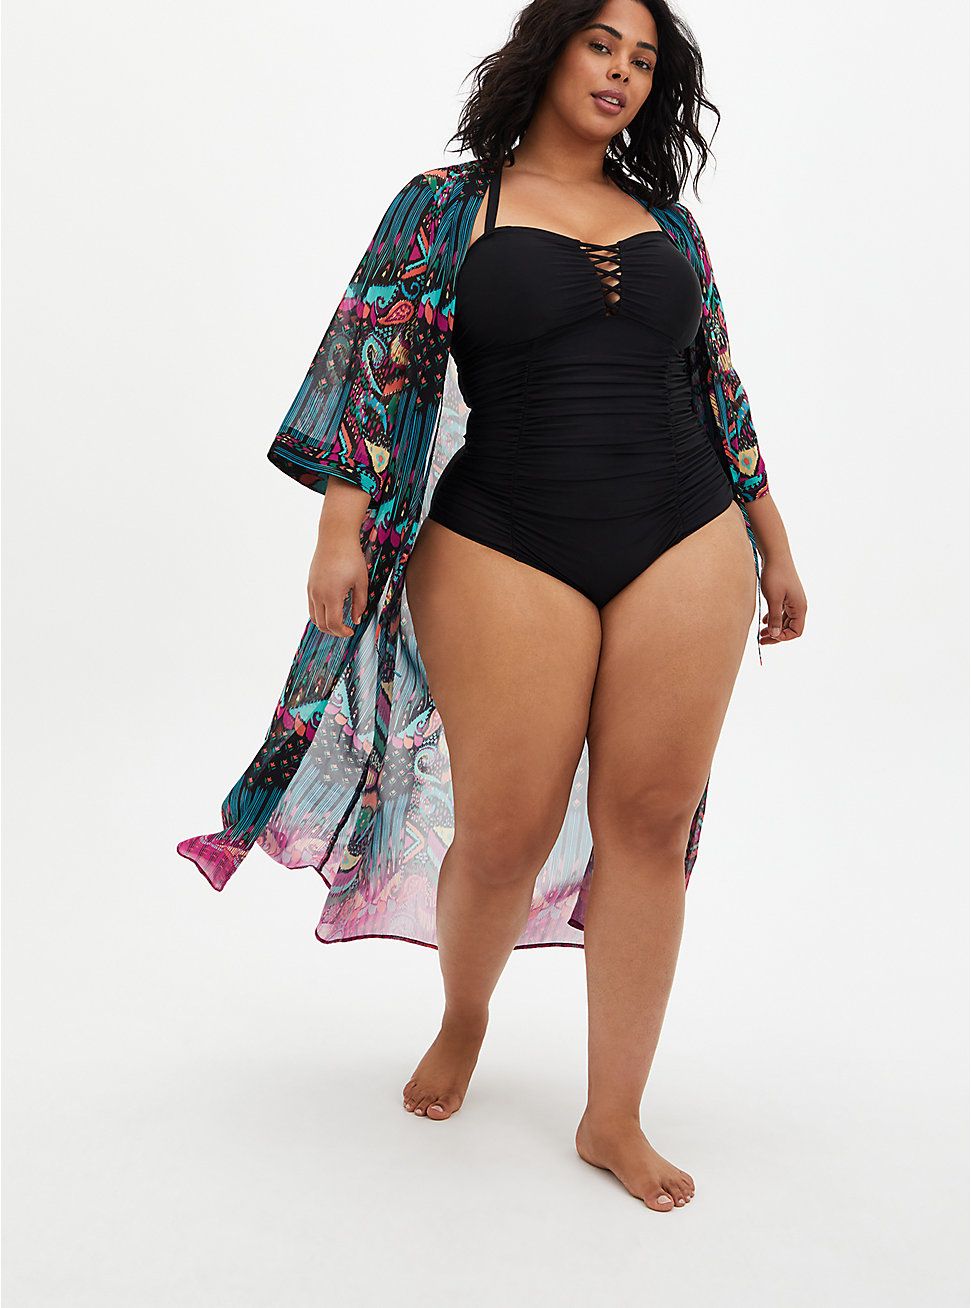 Womens Plus Size Lace Collar Bathing Suit Cover Up Swimsuit Bikini Swimwear Summer Dress for Beach Pool 